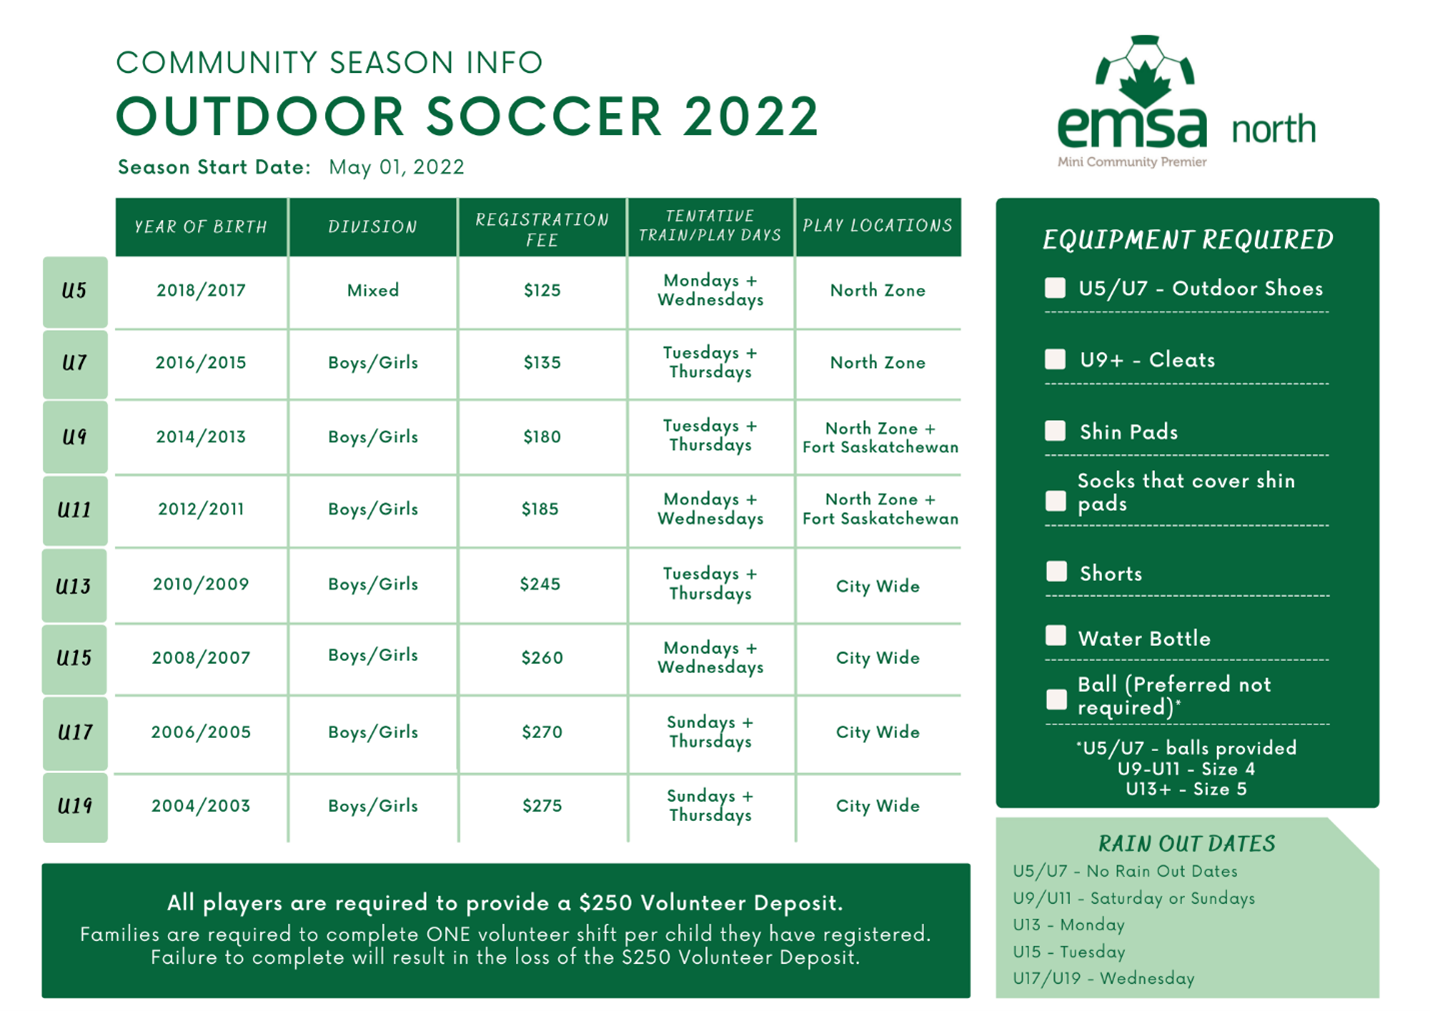 EMSA North Soccer 2022